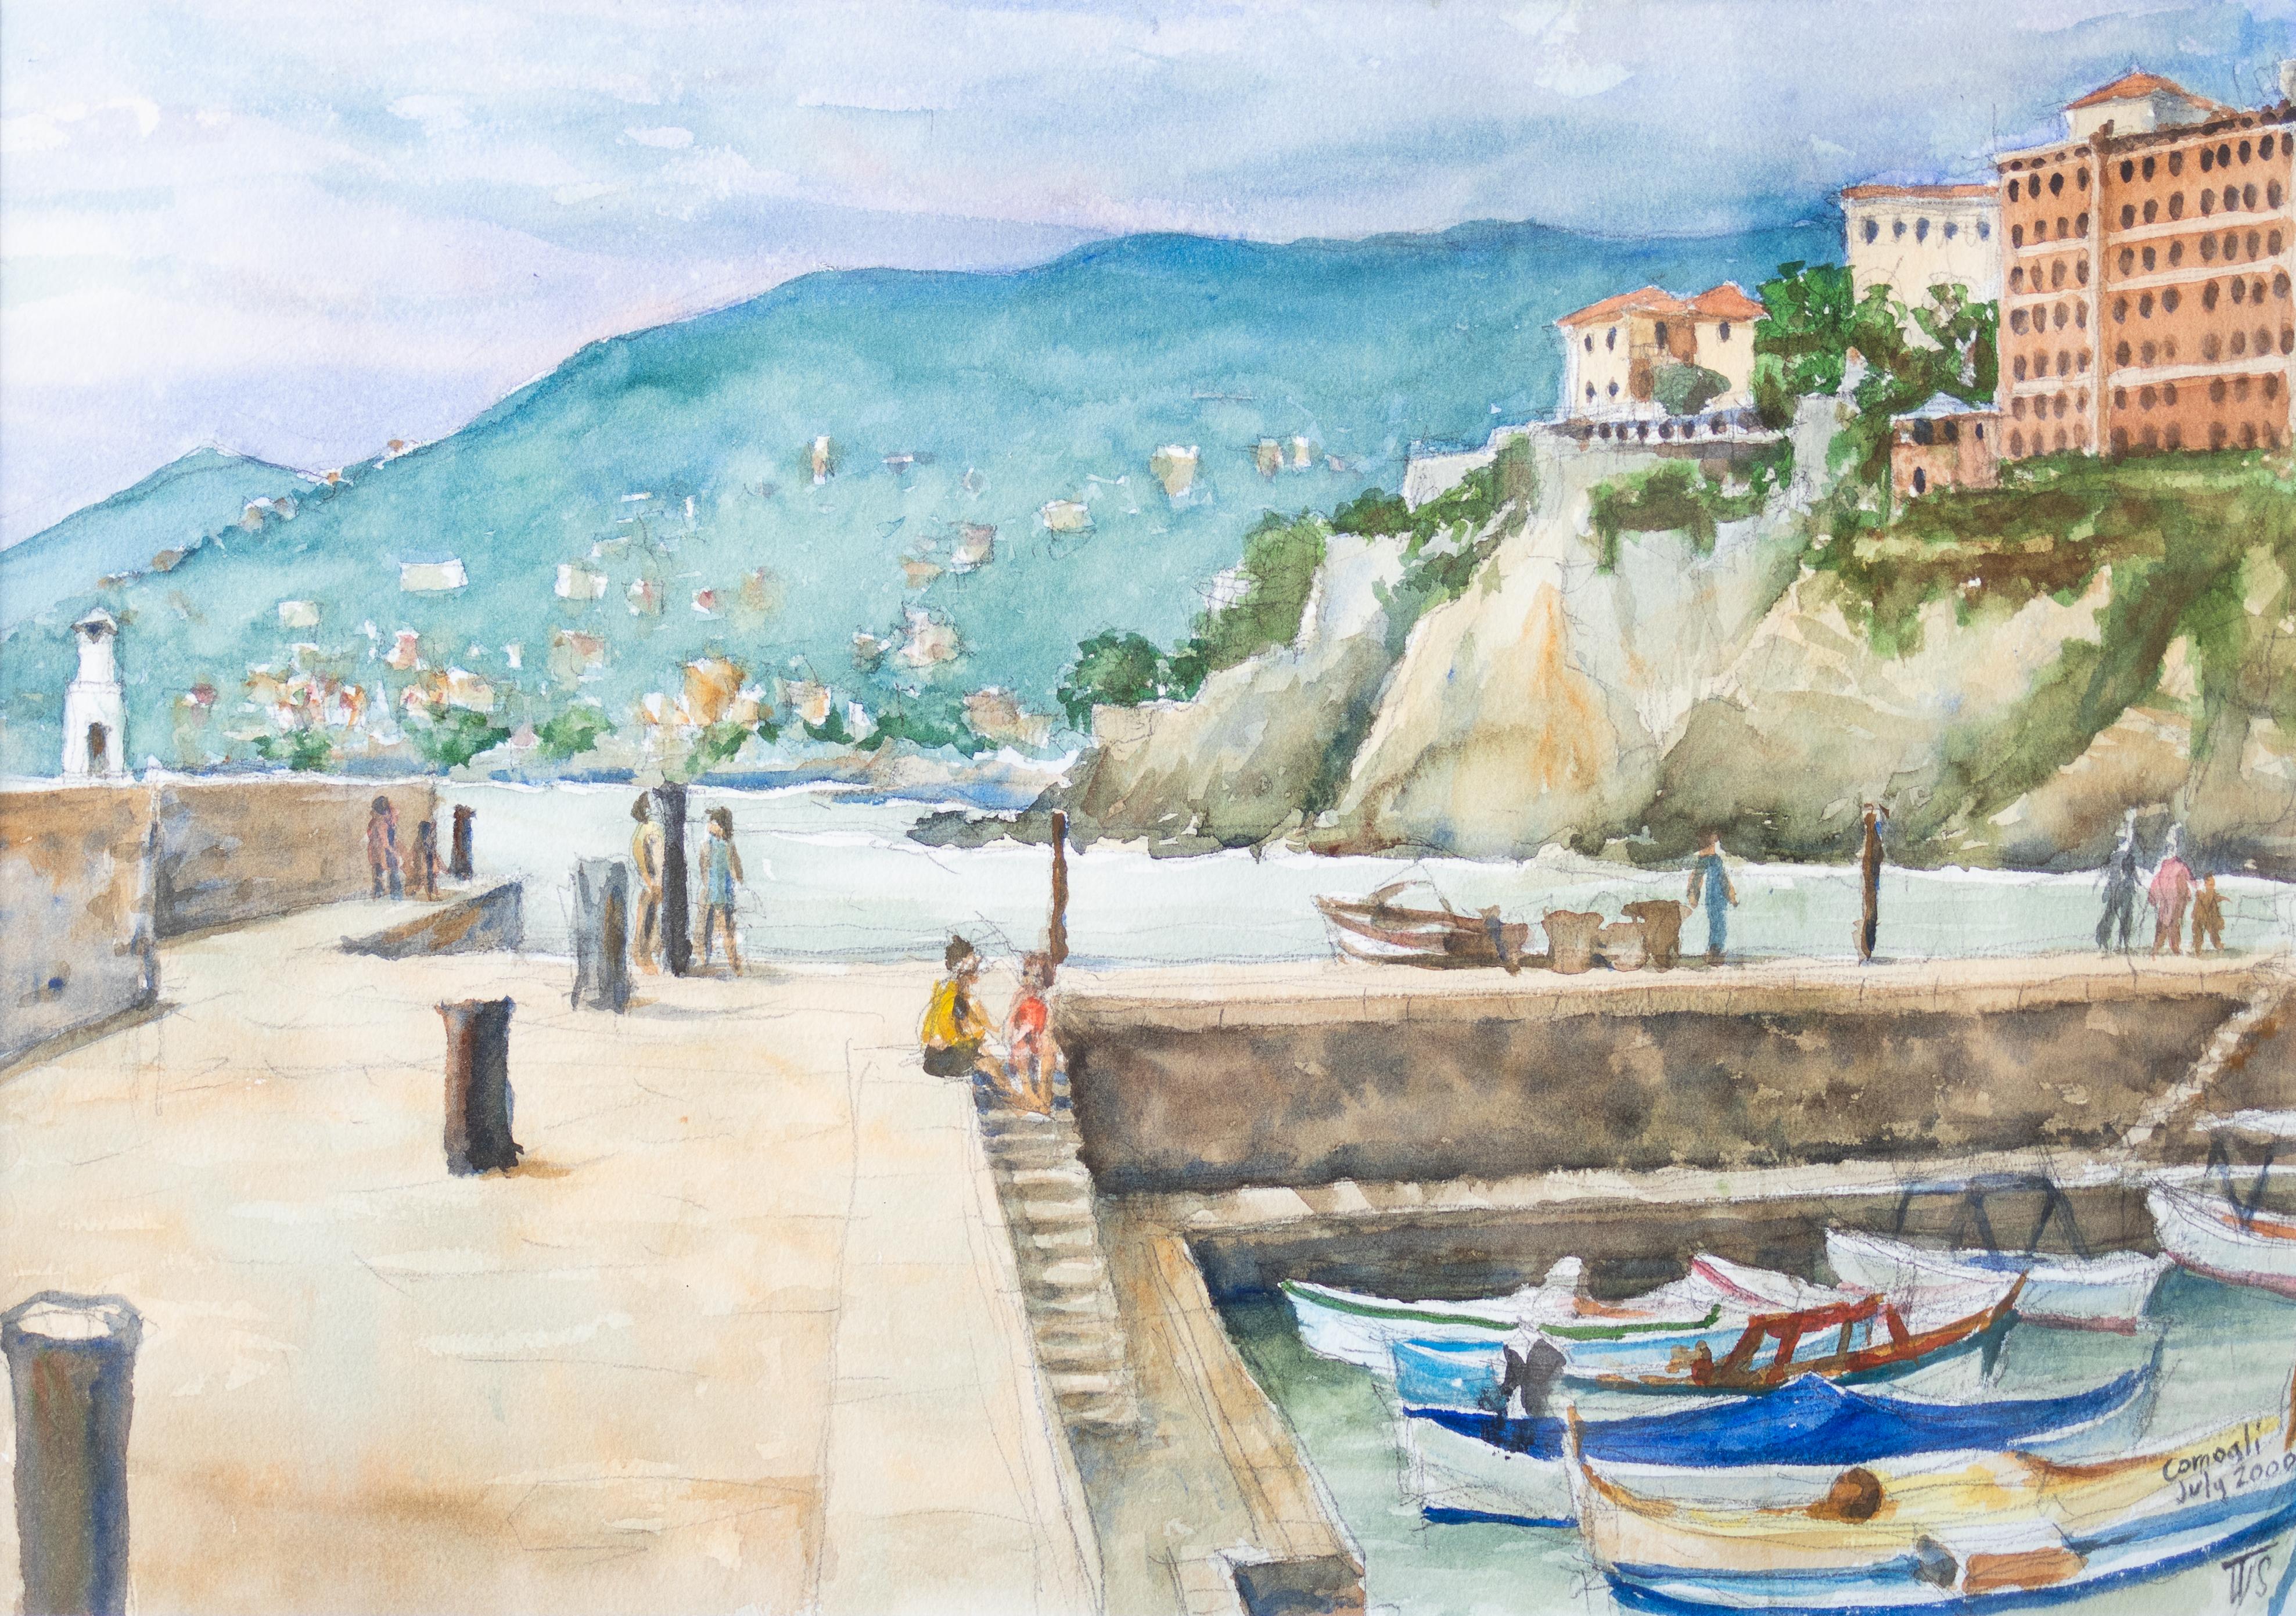 Tom Shefelman Landscape Art - "Before the Storm" Italian Seaside view from a Dock 